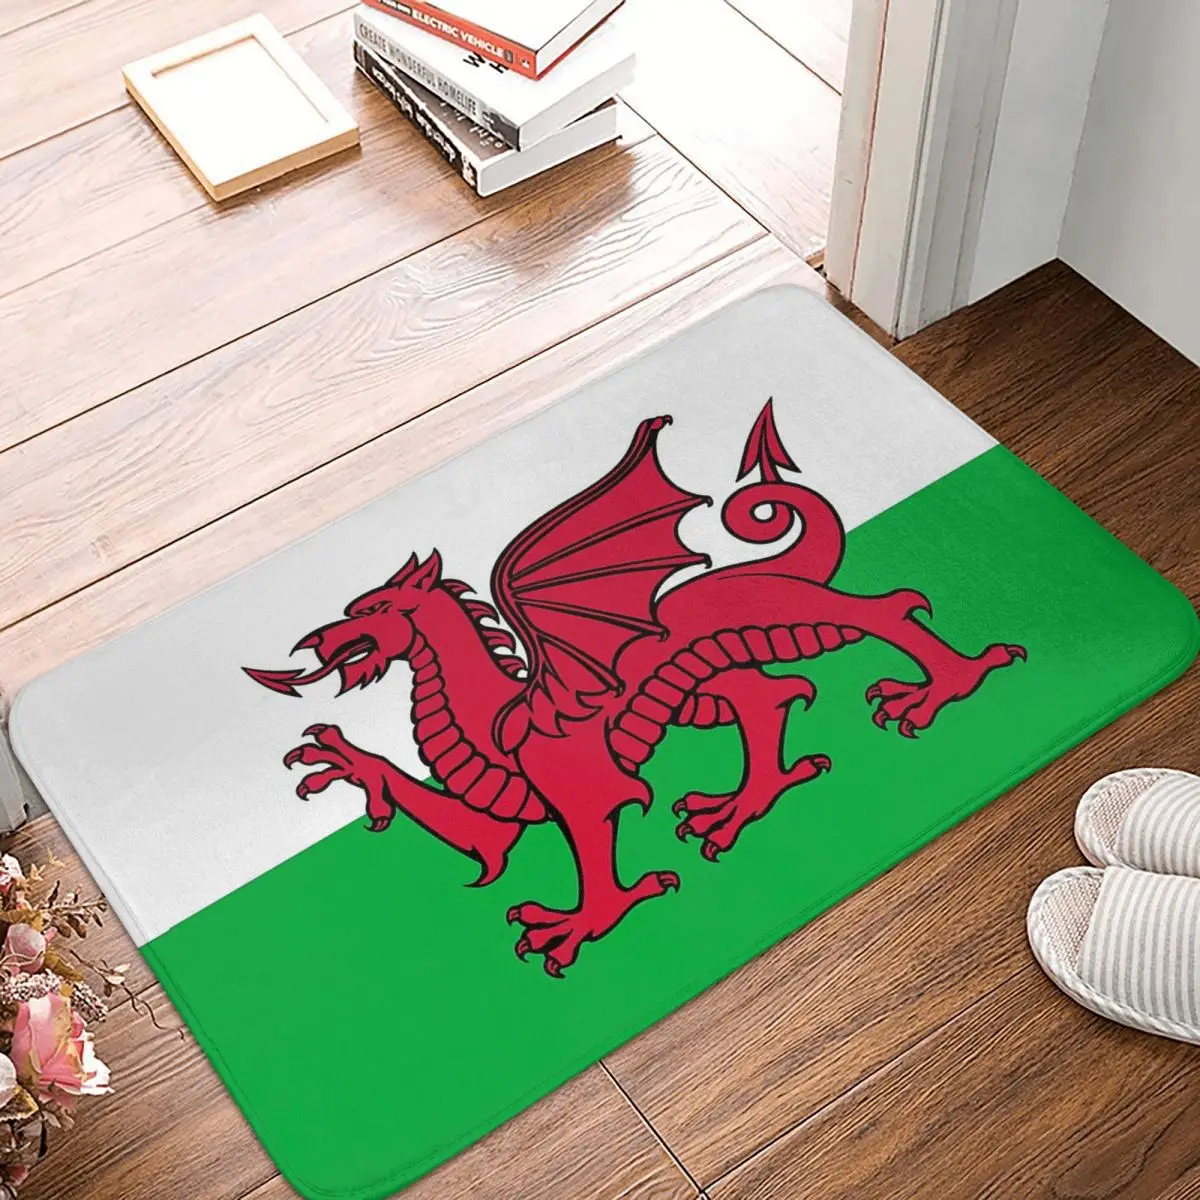 

National Flag Bathroom Mat Welsh Dragon Doormat Kitchen Carpet Entrance Door Rug Home Decor